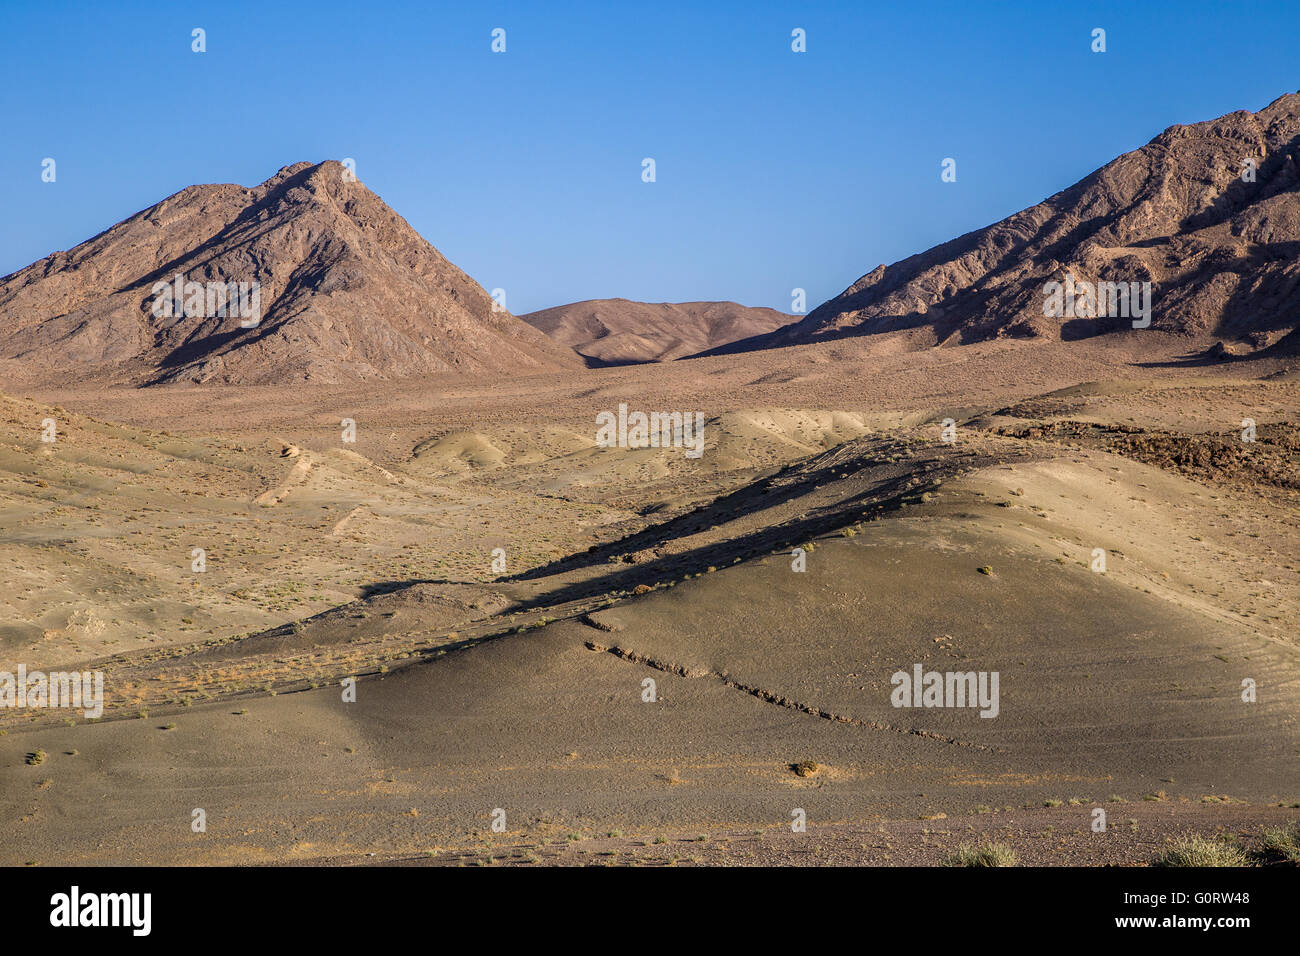 Irán, meseta central y paisaje semidesértico Foto de stock